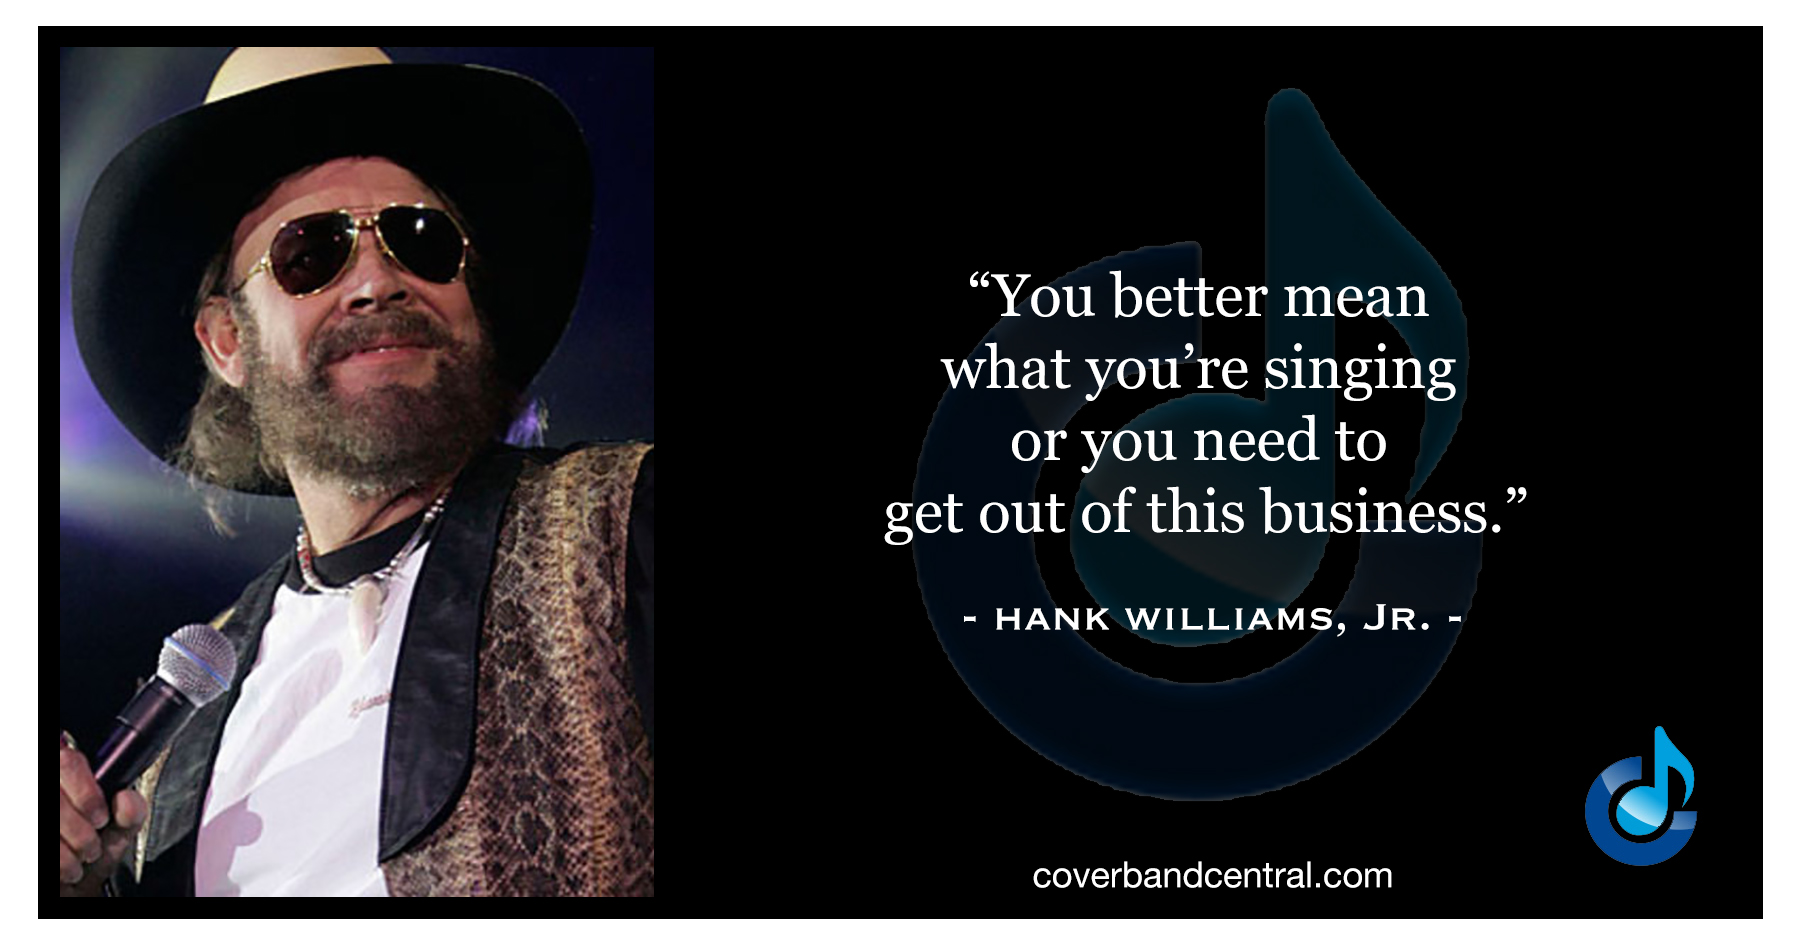 Hank Williams, Jr. quote